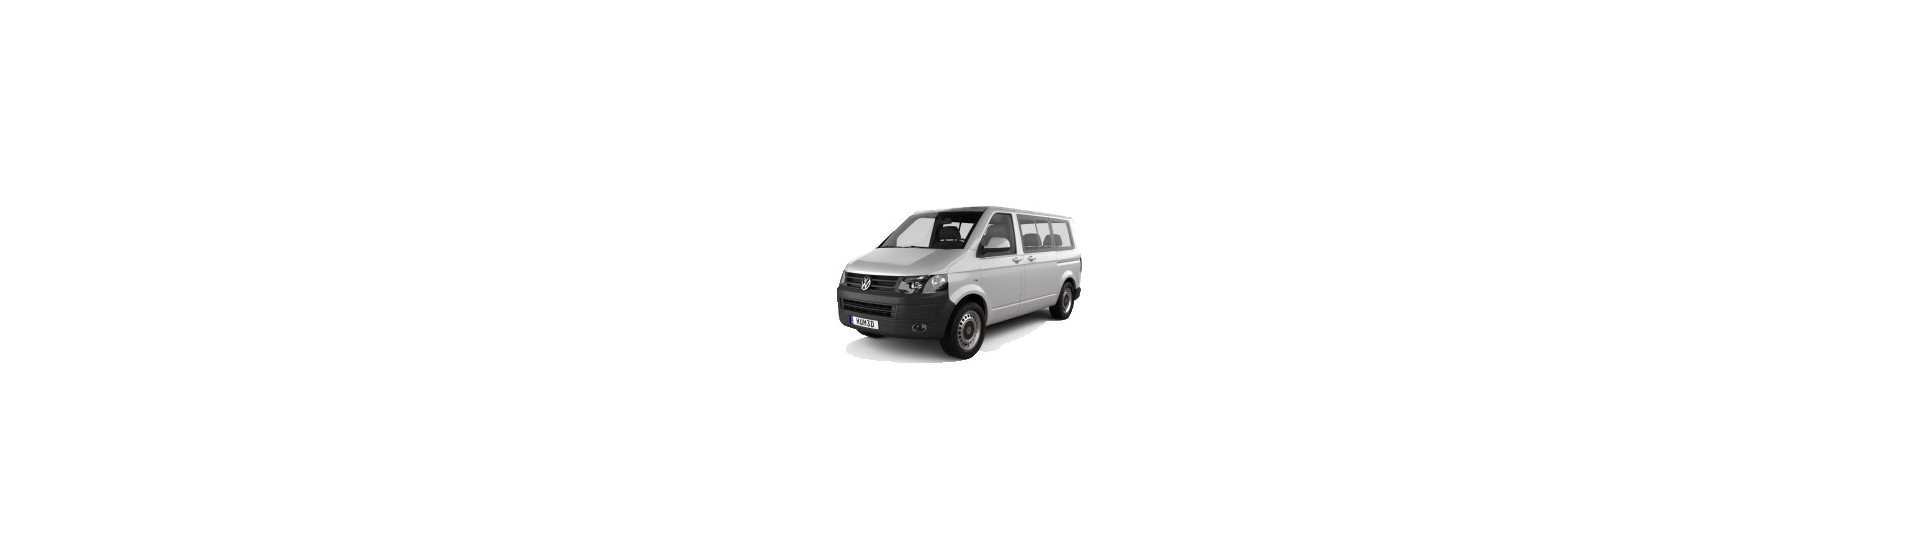 Cauti navigatie pentru Volkswagen T5 Multivan? Incearca produsele Caraudiomarket